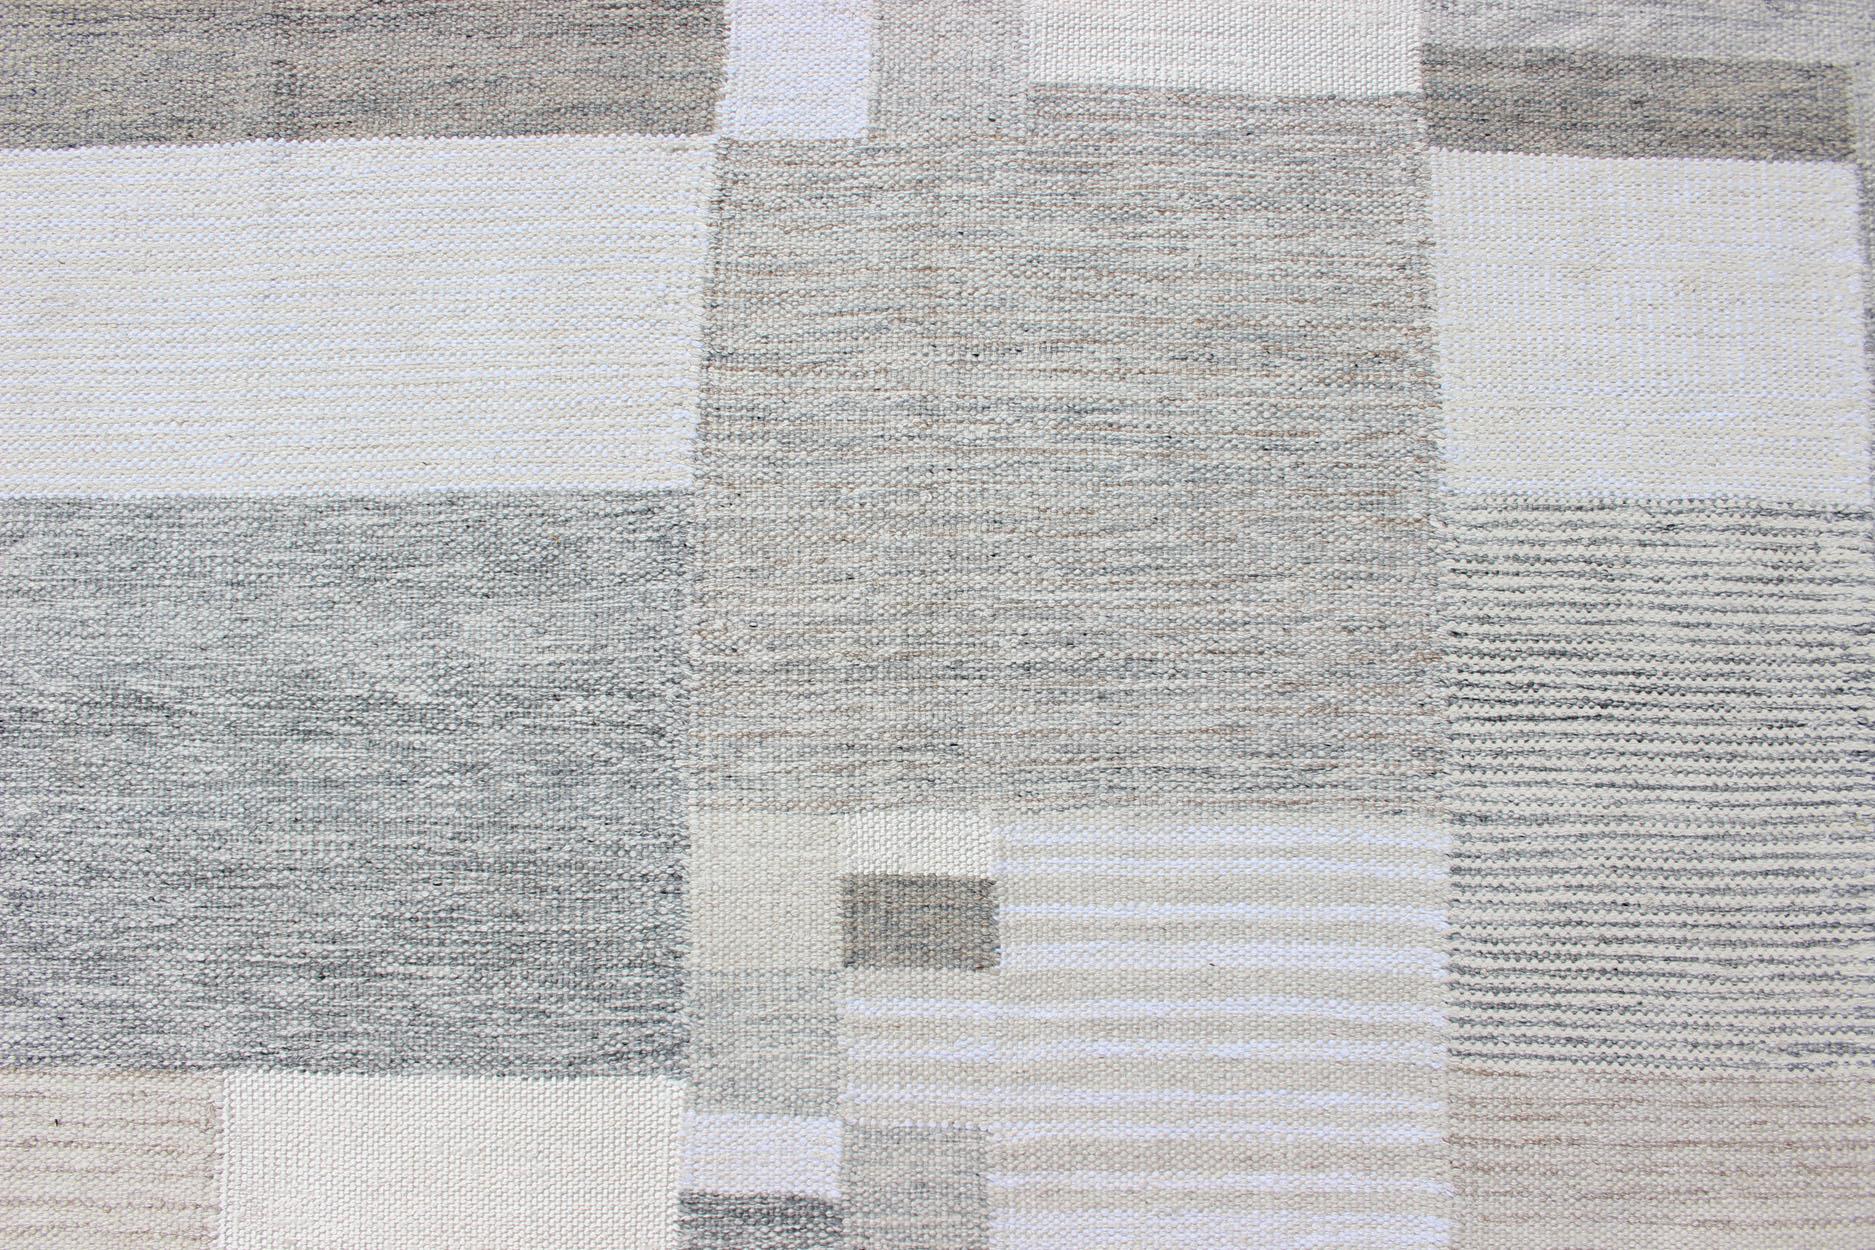 Modern Scandinavian Flat-Weave Rug Design in Gray, beige, Creams & White Tones For Sale 2